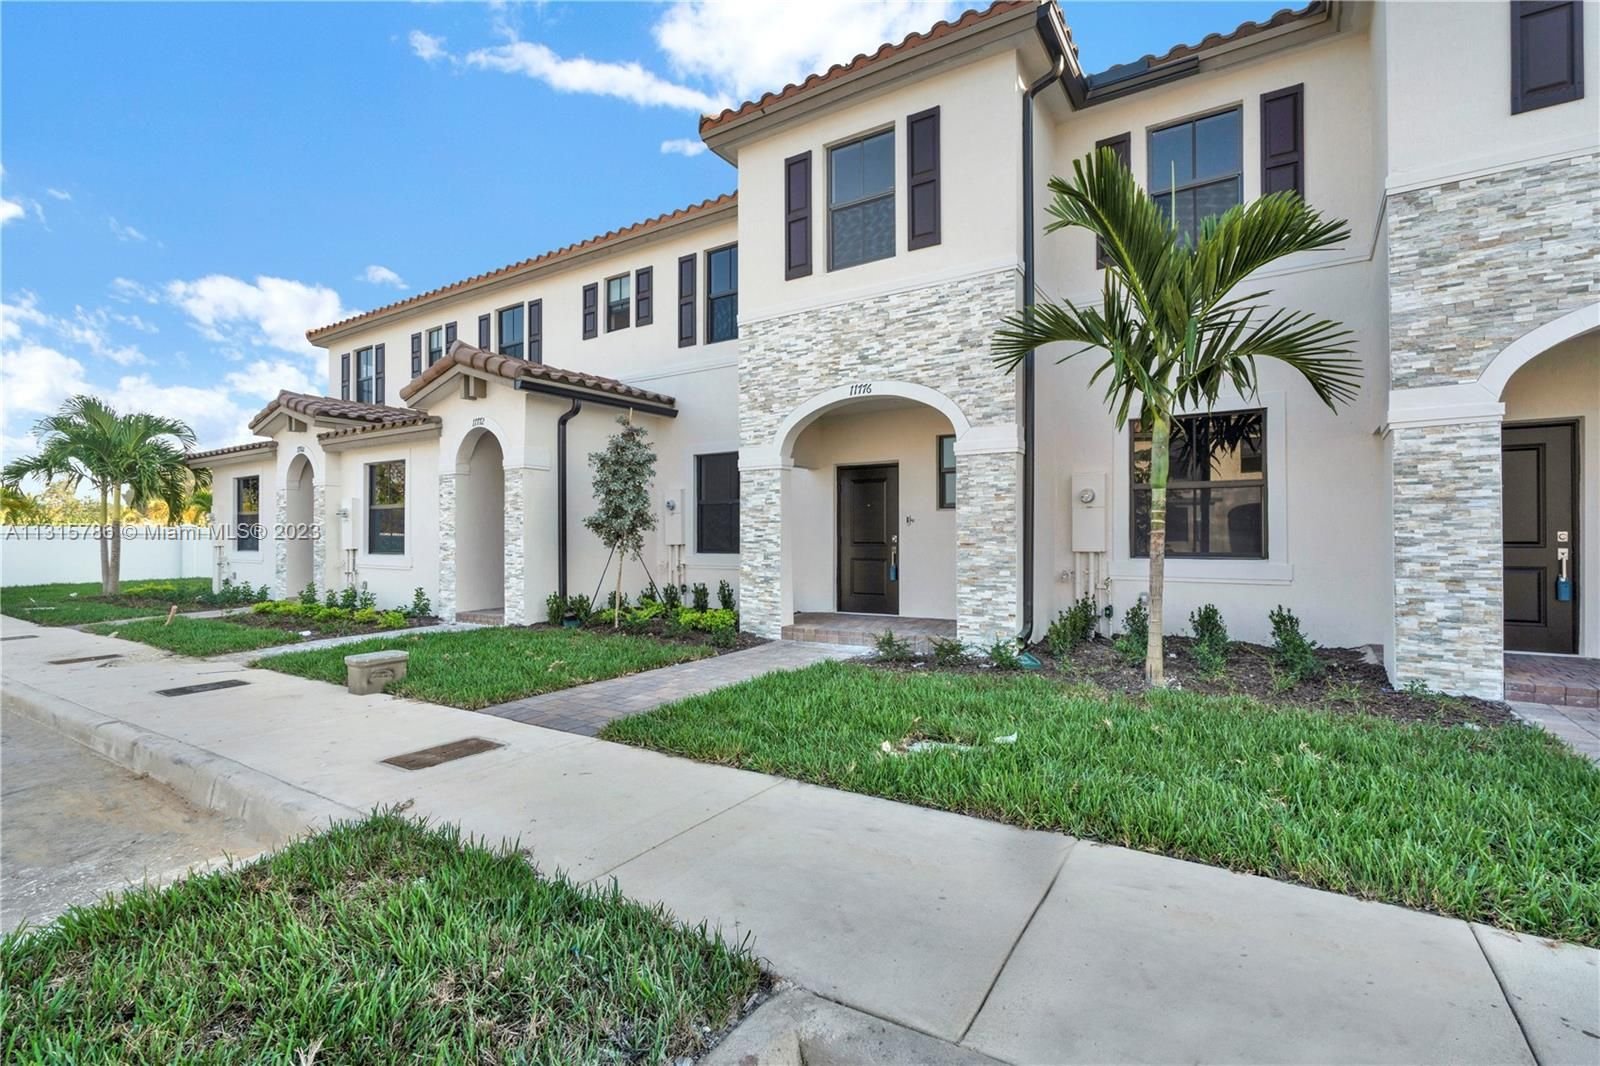 Real estate property located at 11776 247th Ter #0, Miami-Dade County, Miami, FL